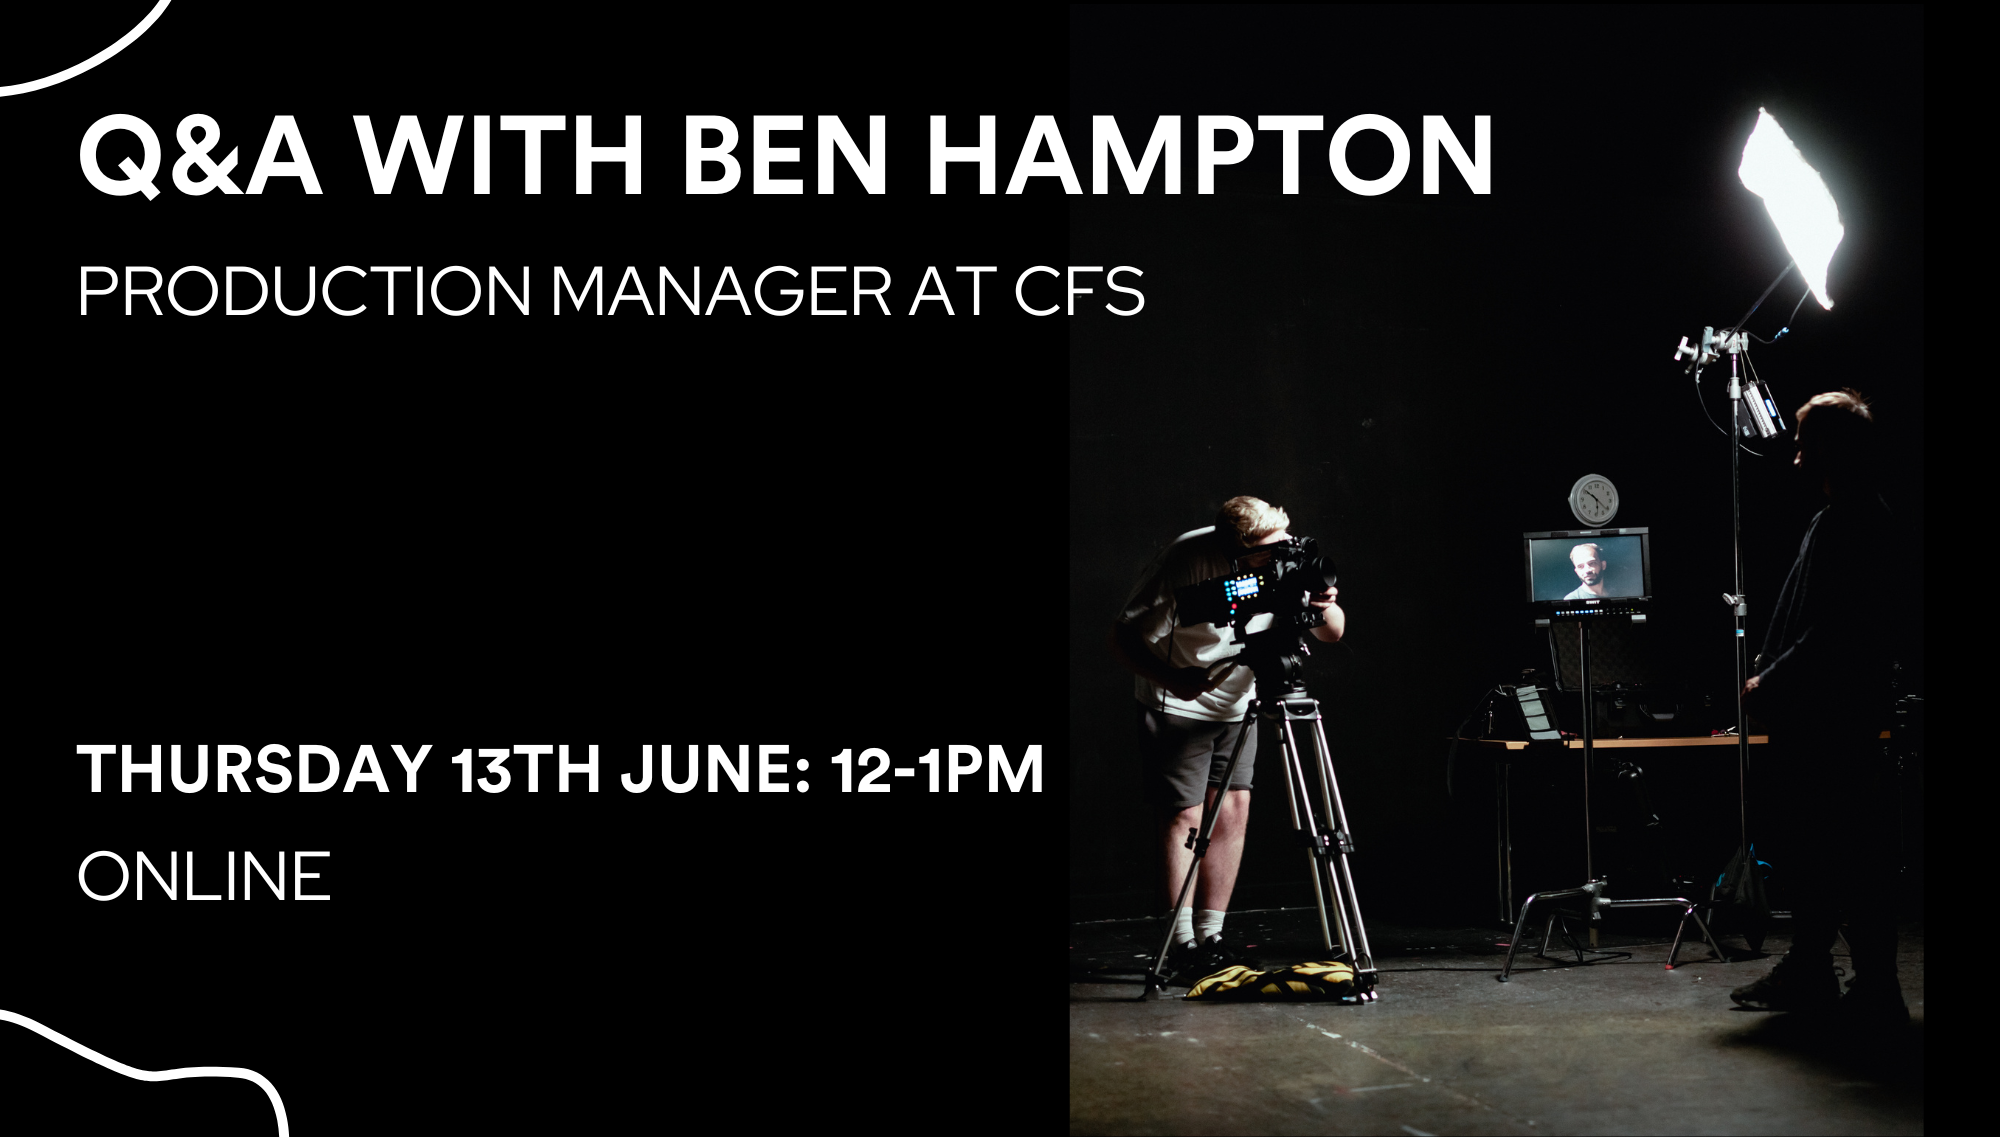 Virtual Q&A Session with Ben Hampton